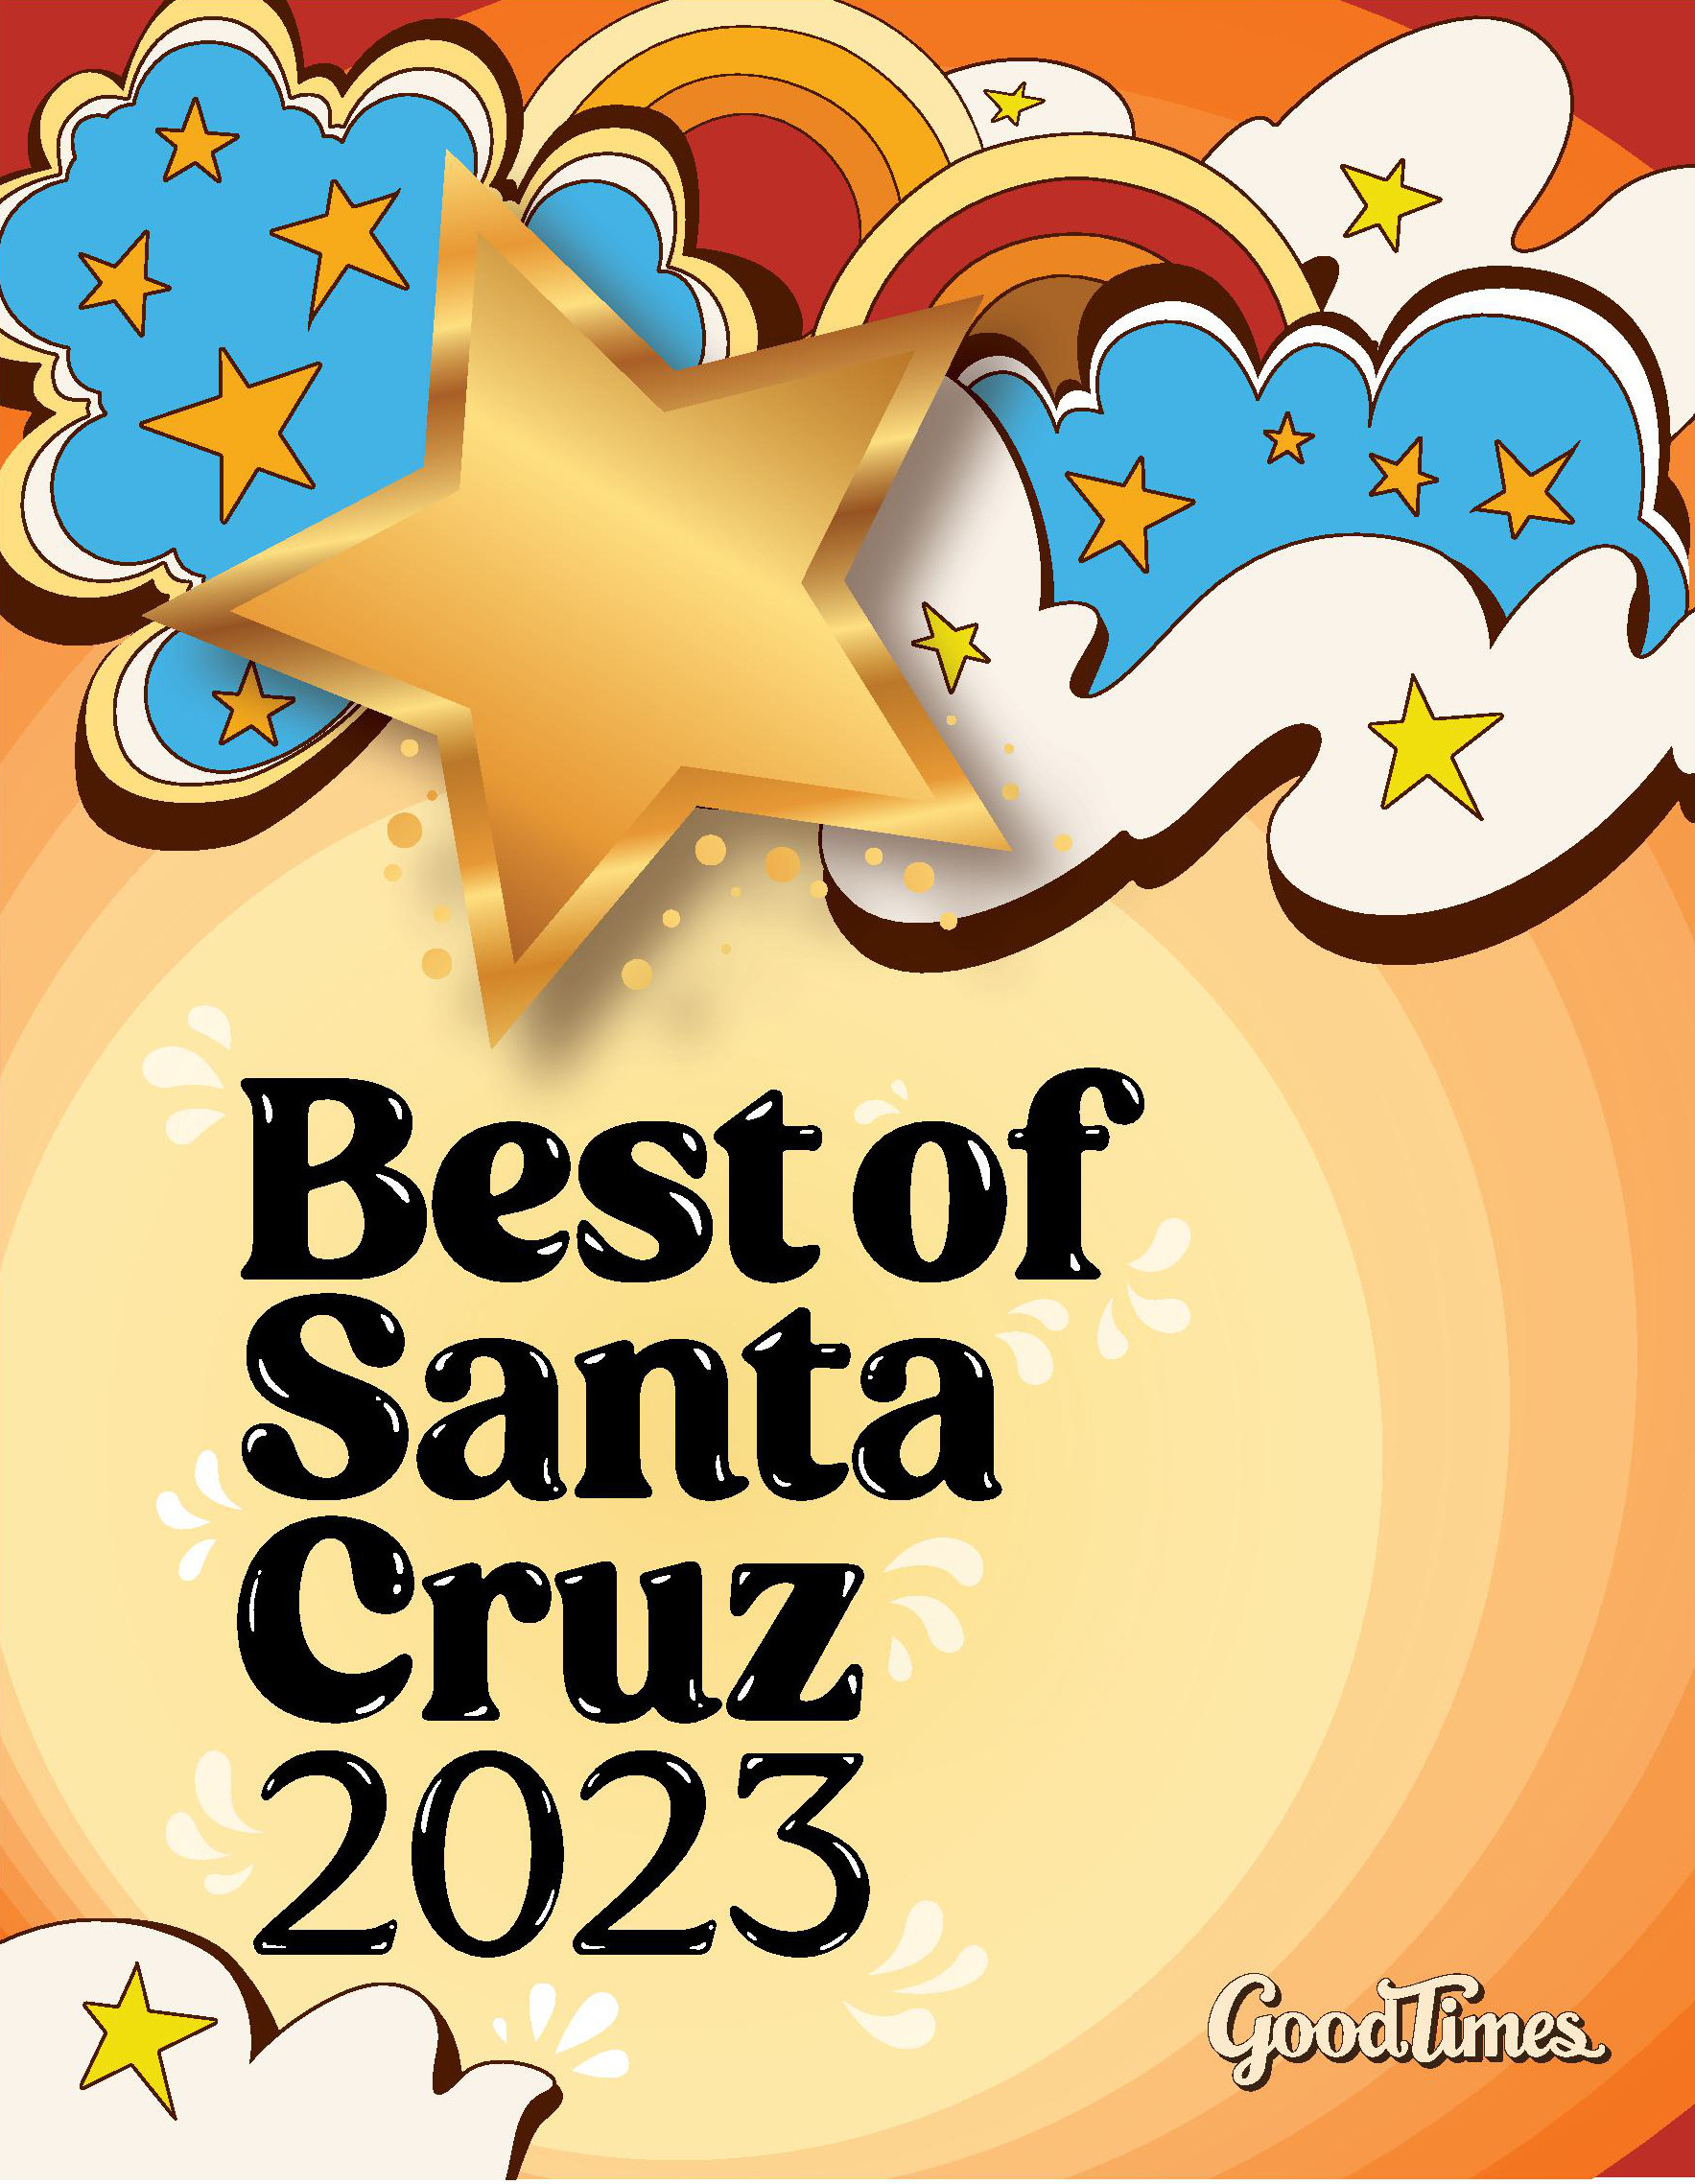 Best of Santa Cruz 2023